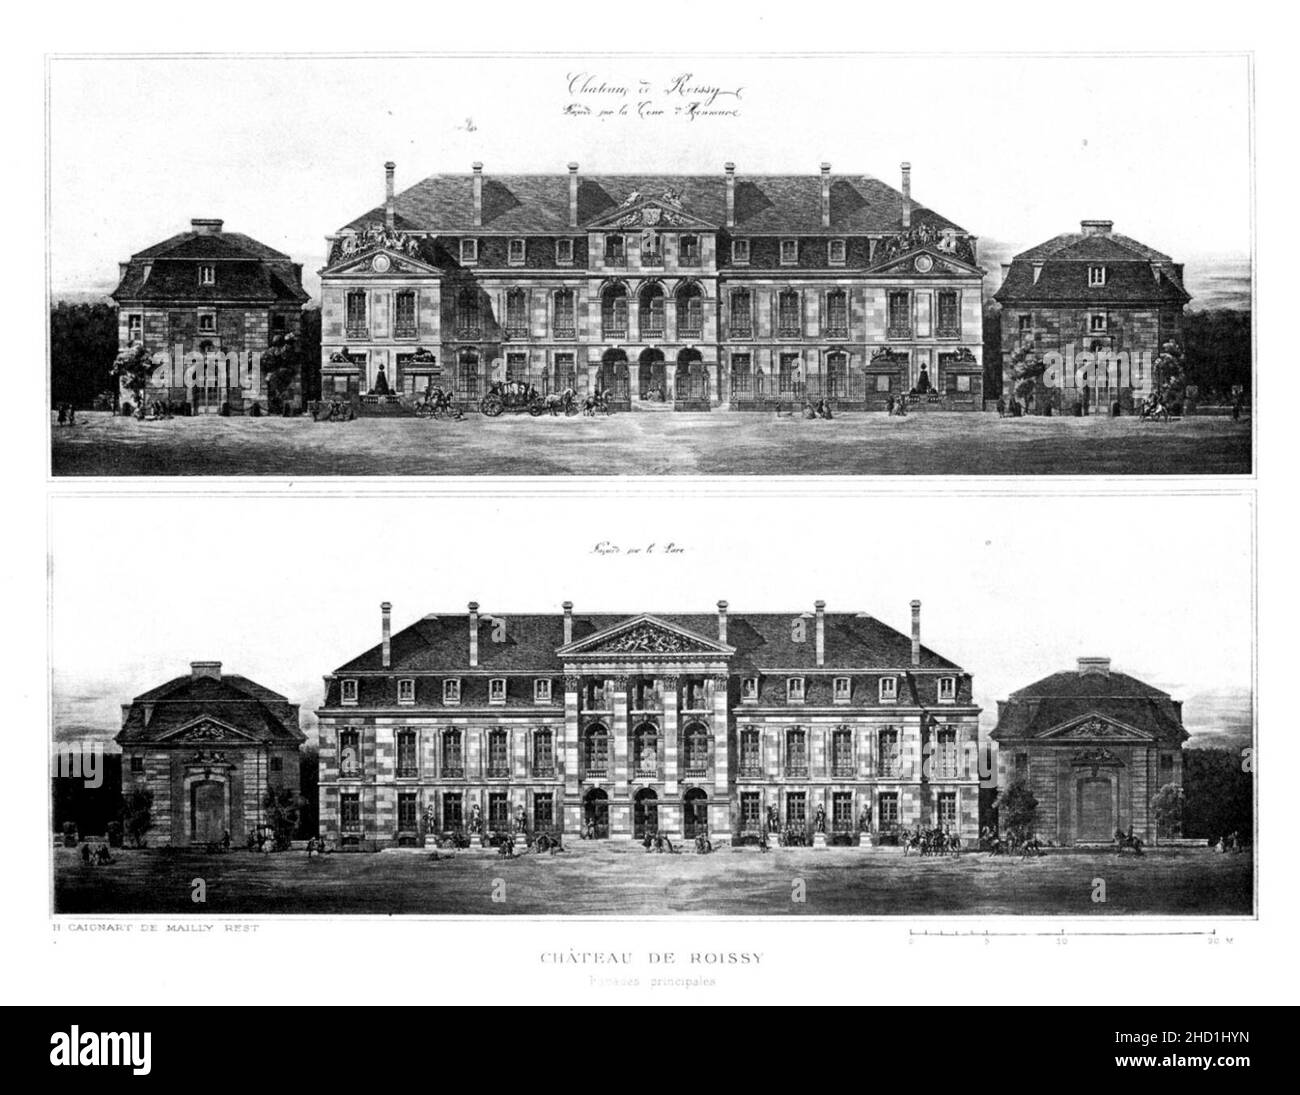 Roissy-en-France - Chateau de Roissy - Fassaden principales. Stockfoto